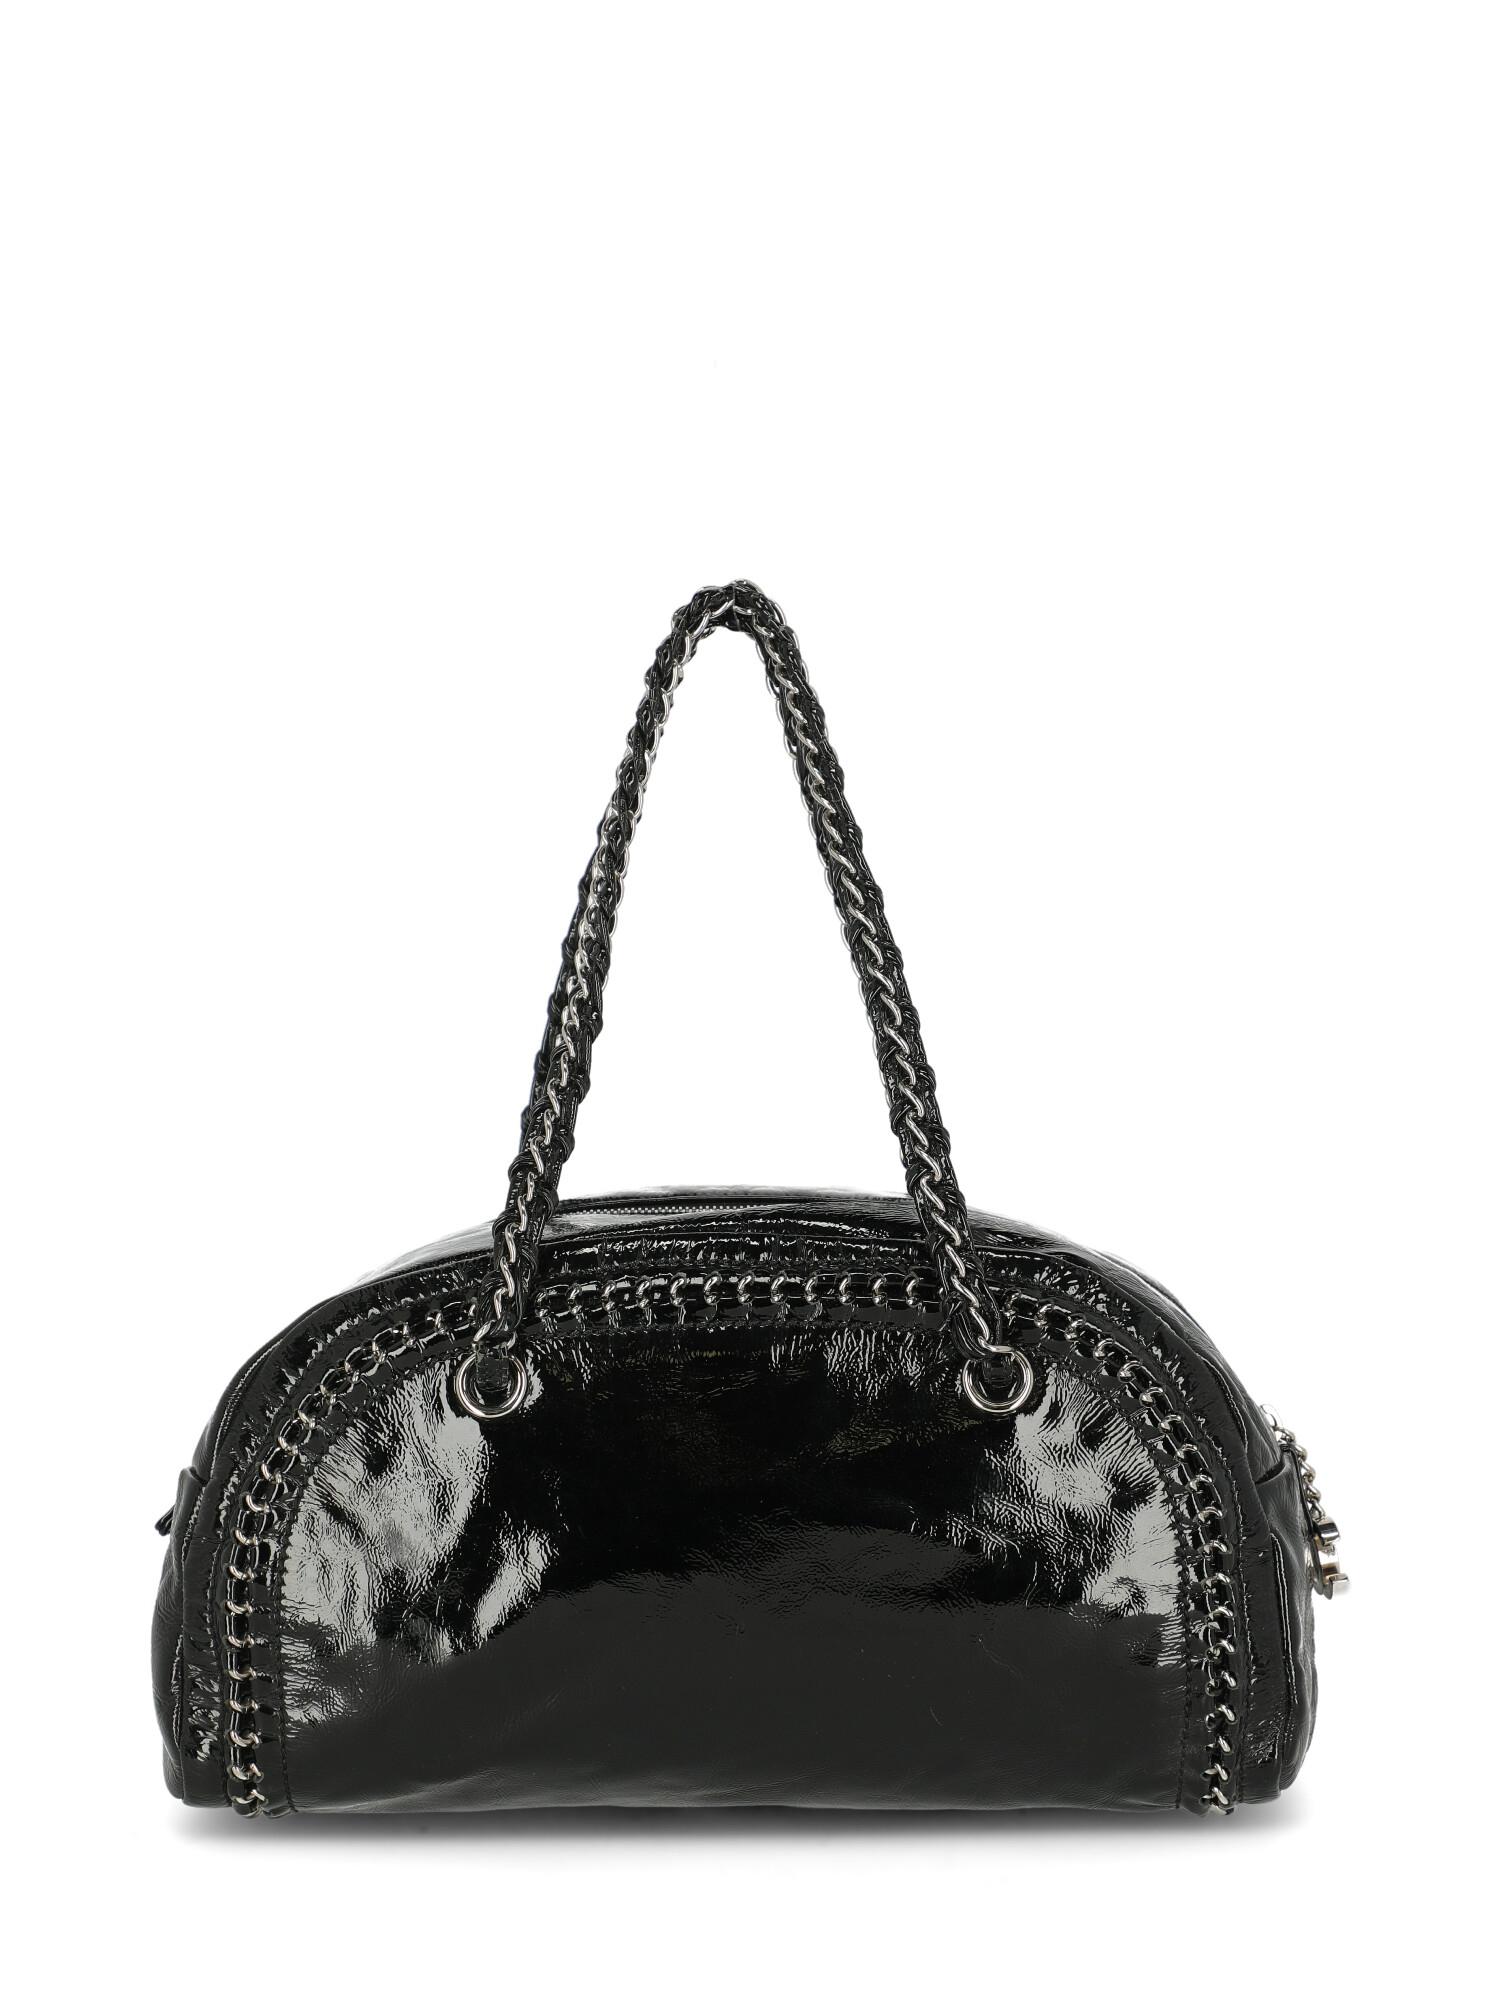 Women's Chanel Woman Handbag Black Leather For Sale